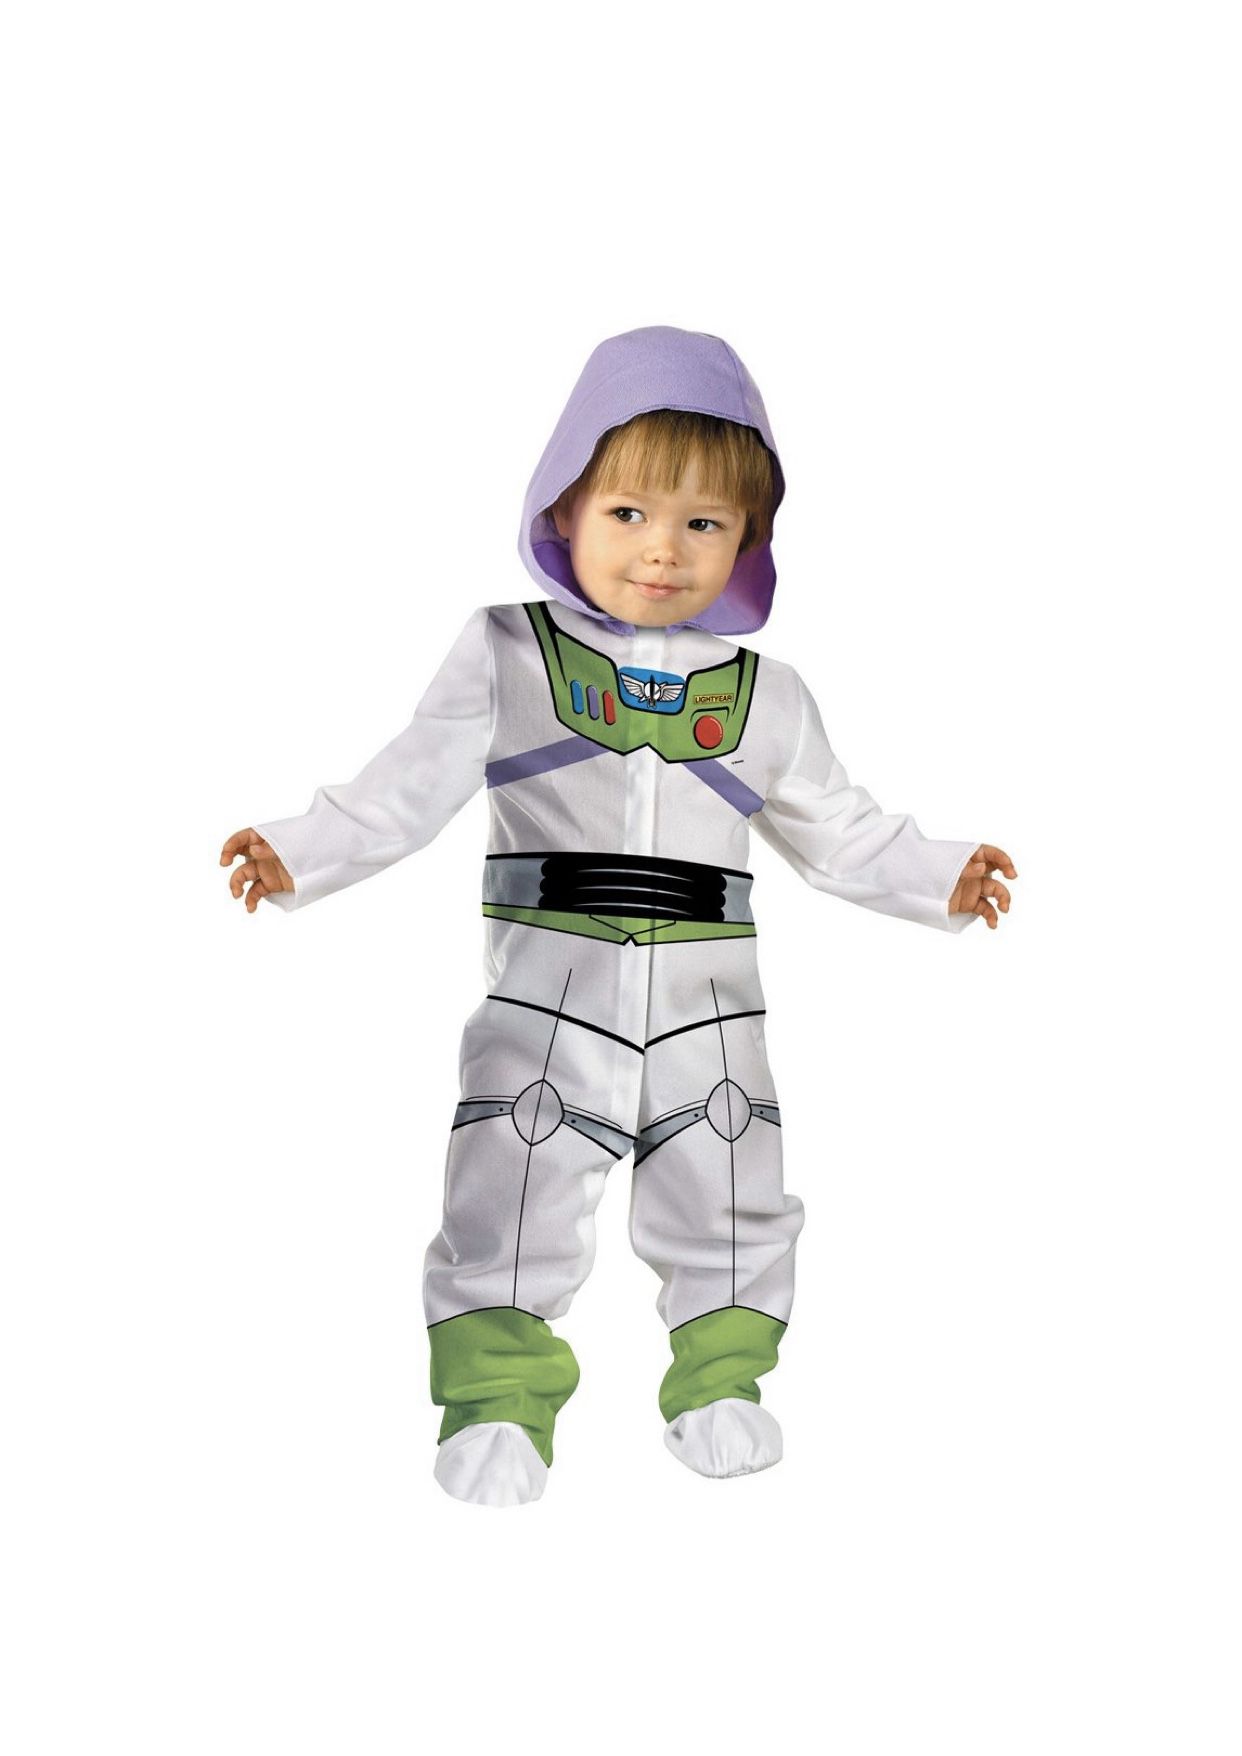 Toy Story Buzz Lightyear Costume